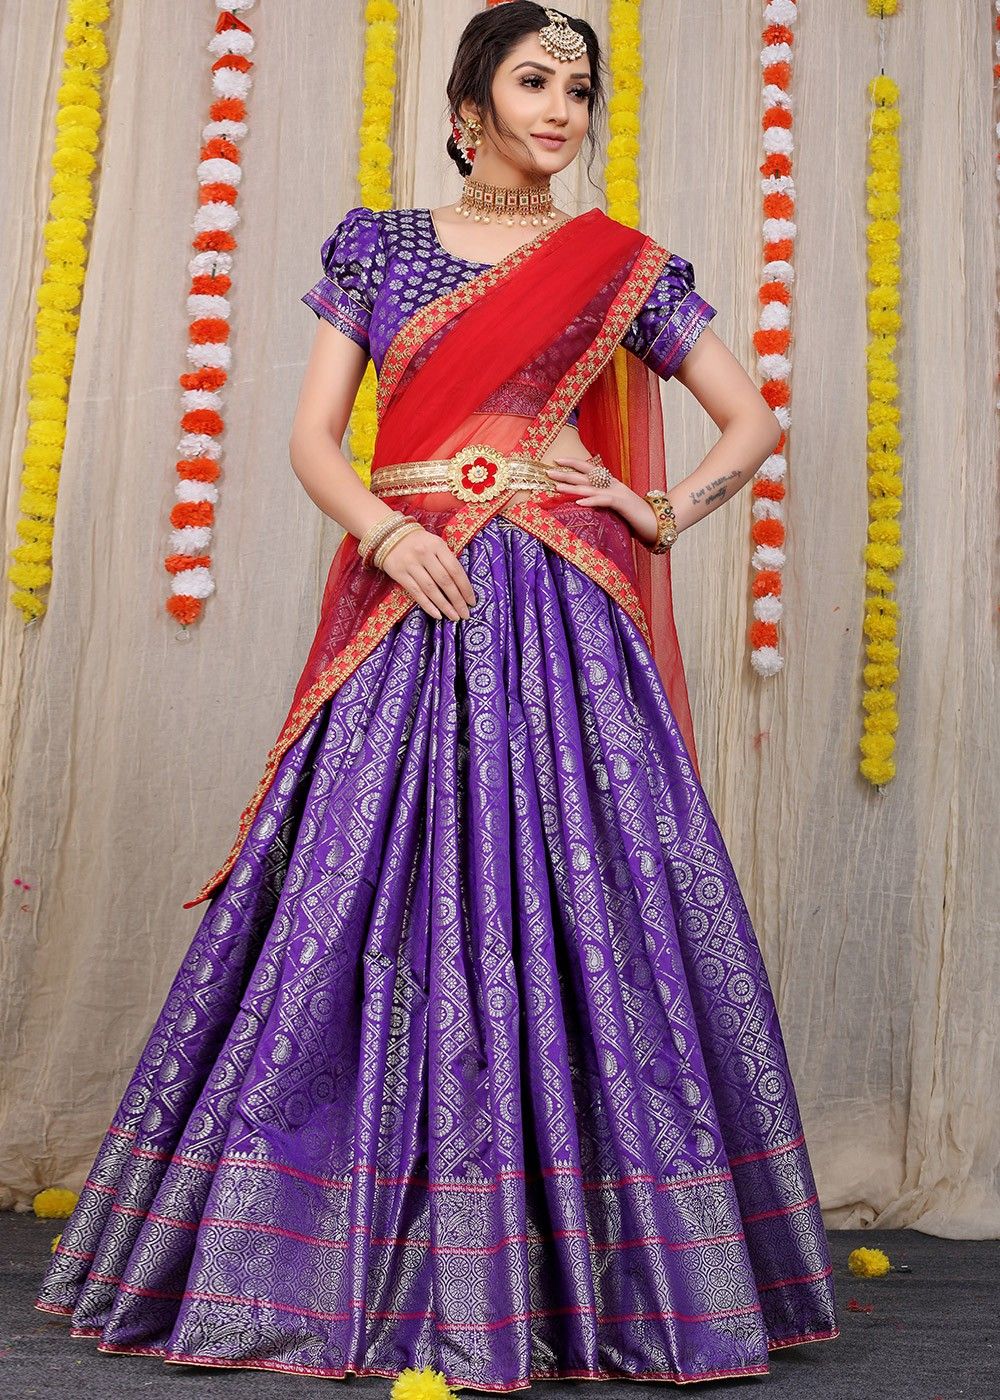 Beautiful Silk Hand Embroidered Lehenga-Choli with beautiful color  combination. | Half saree, Indian outfits lehenga, Lehnga designs